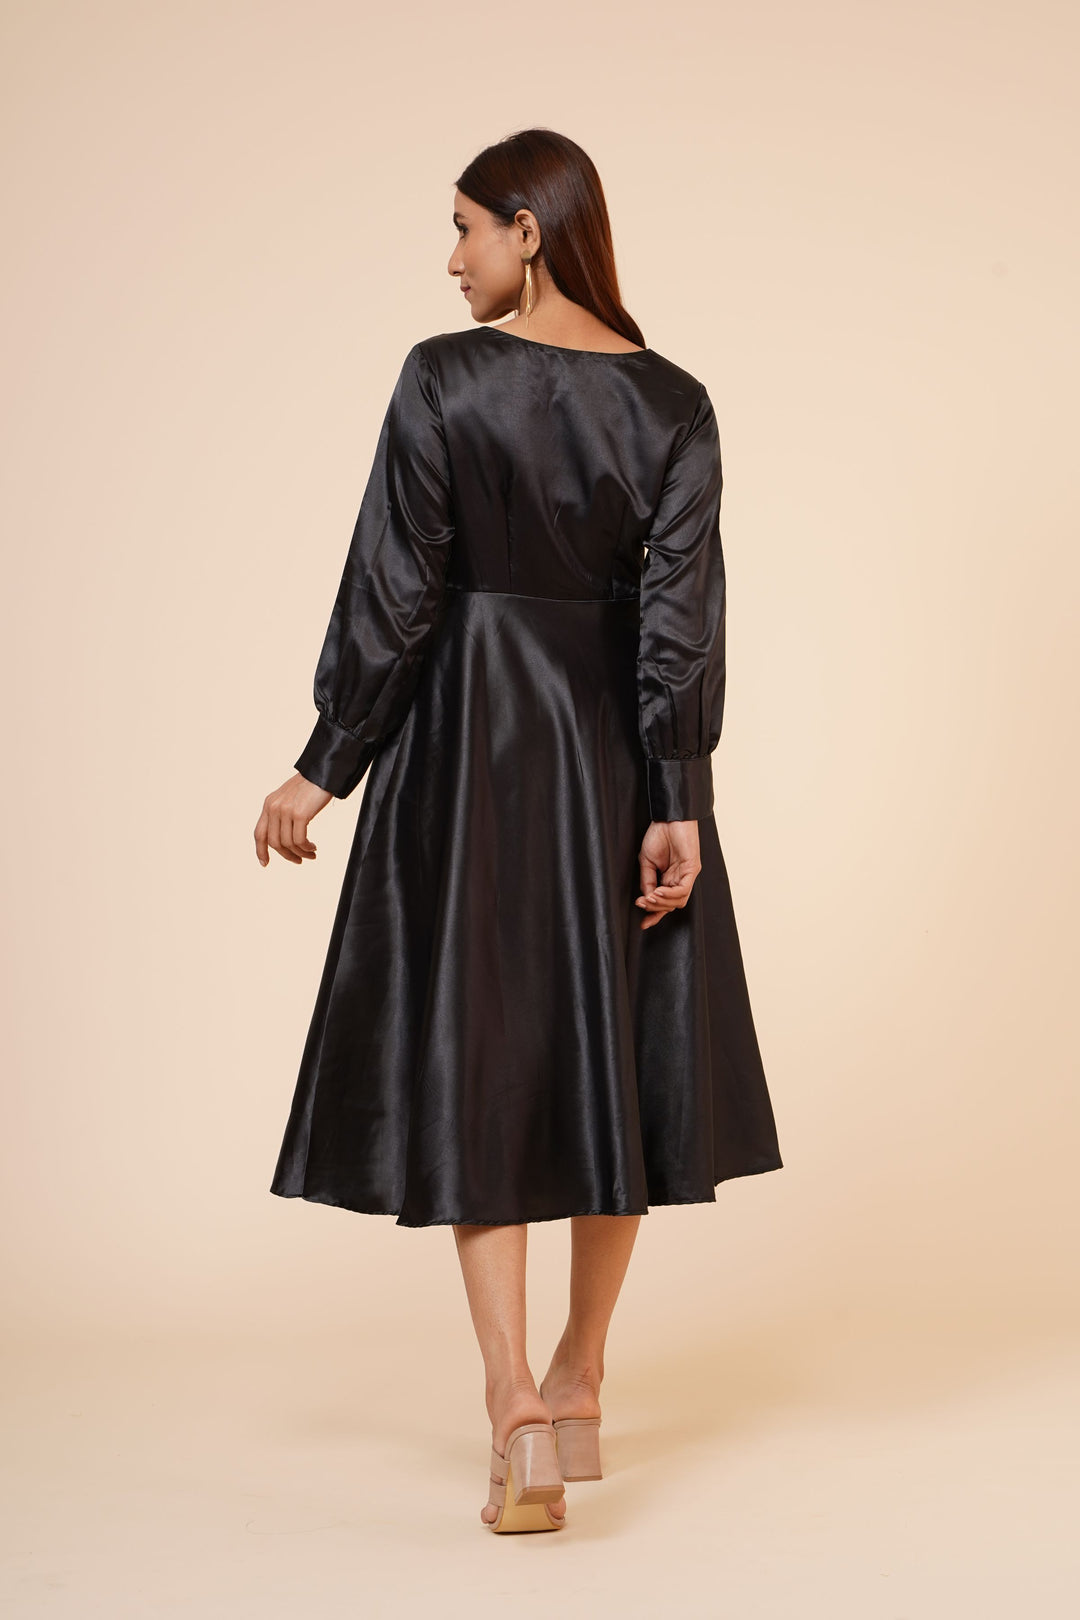 Miracolos By Ruchi's Elegant Cuff Satin Wrap Dress  - Rent